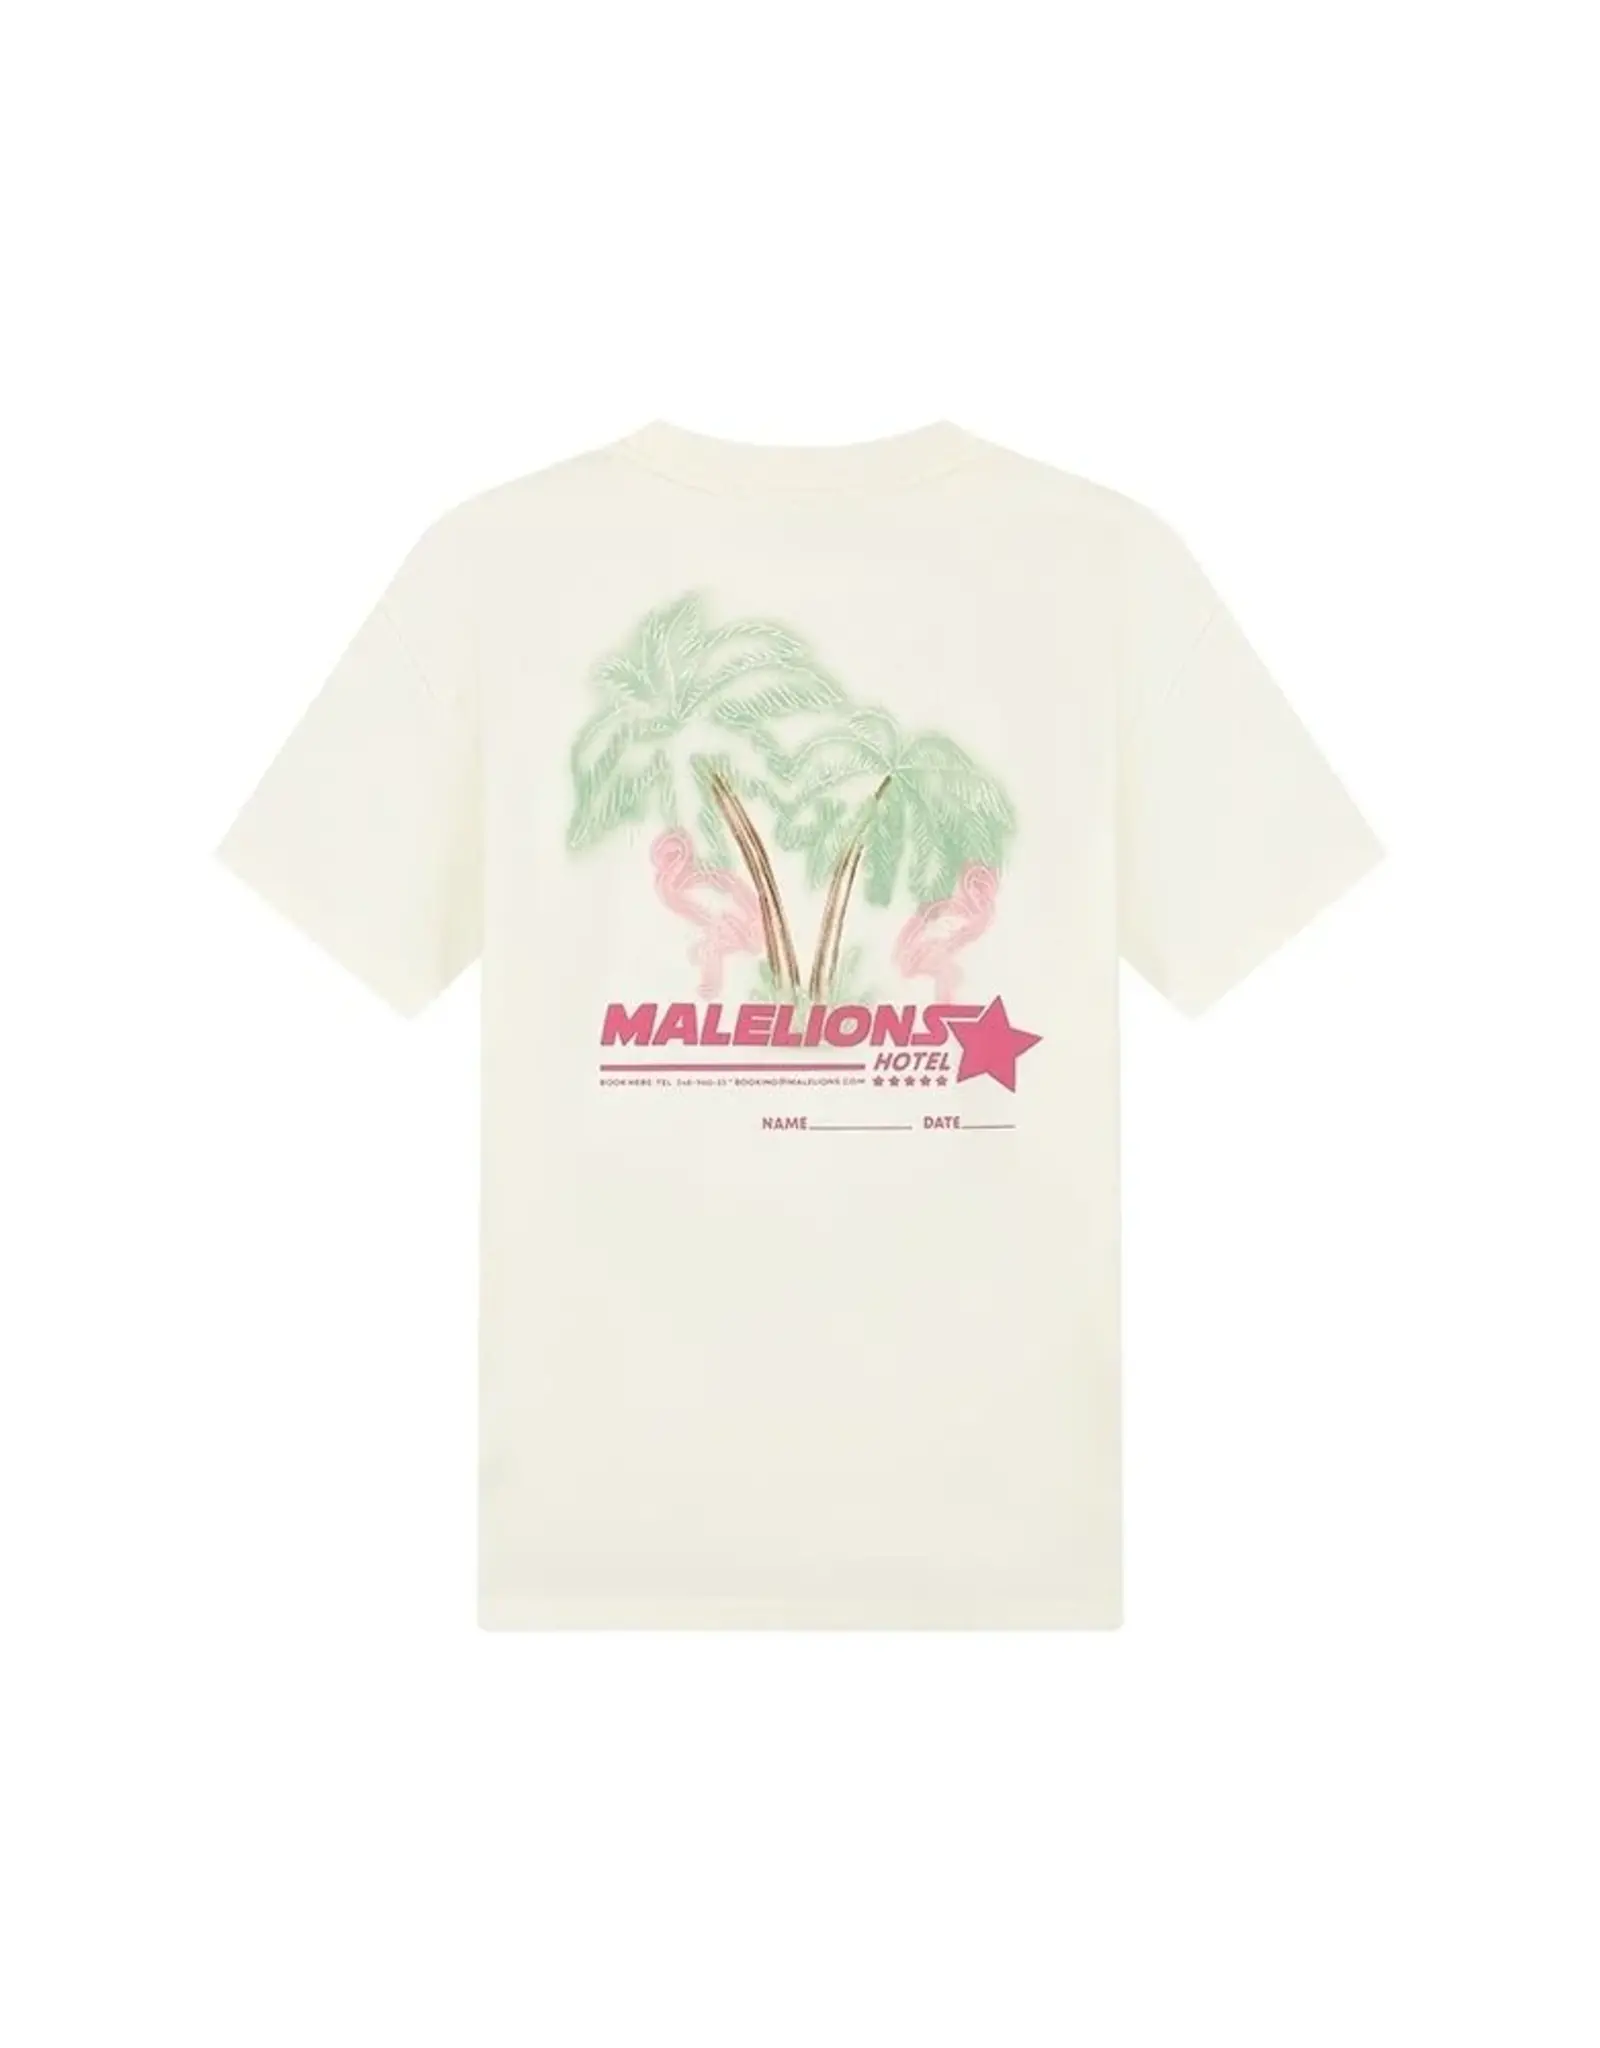 Malelions Hotel T-Shirt